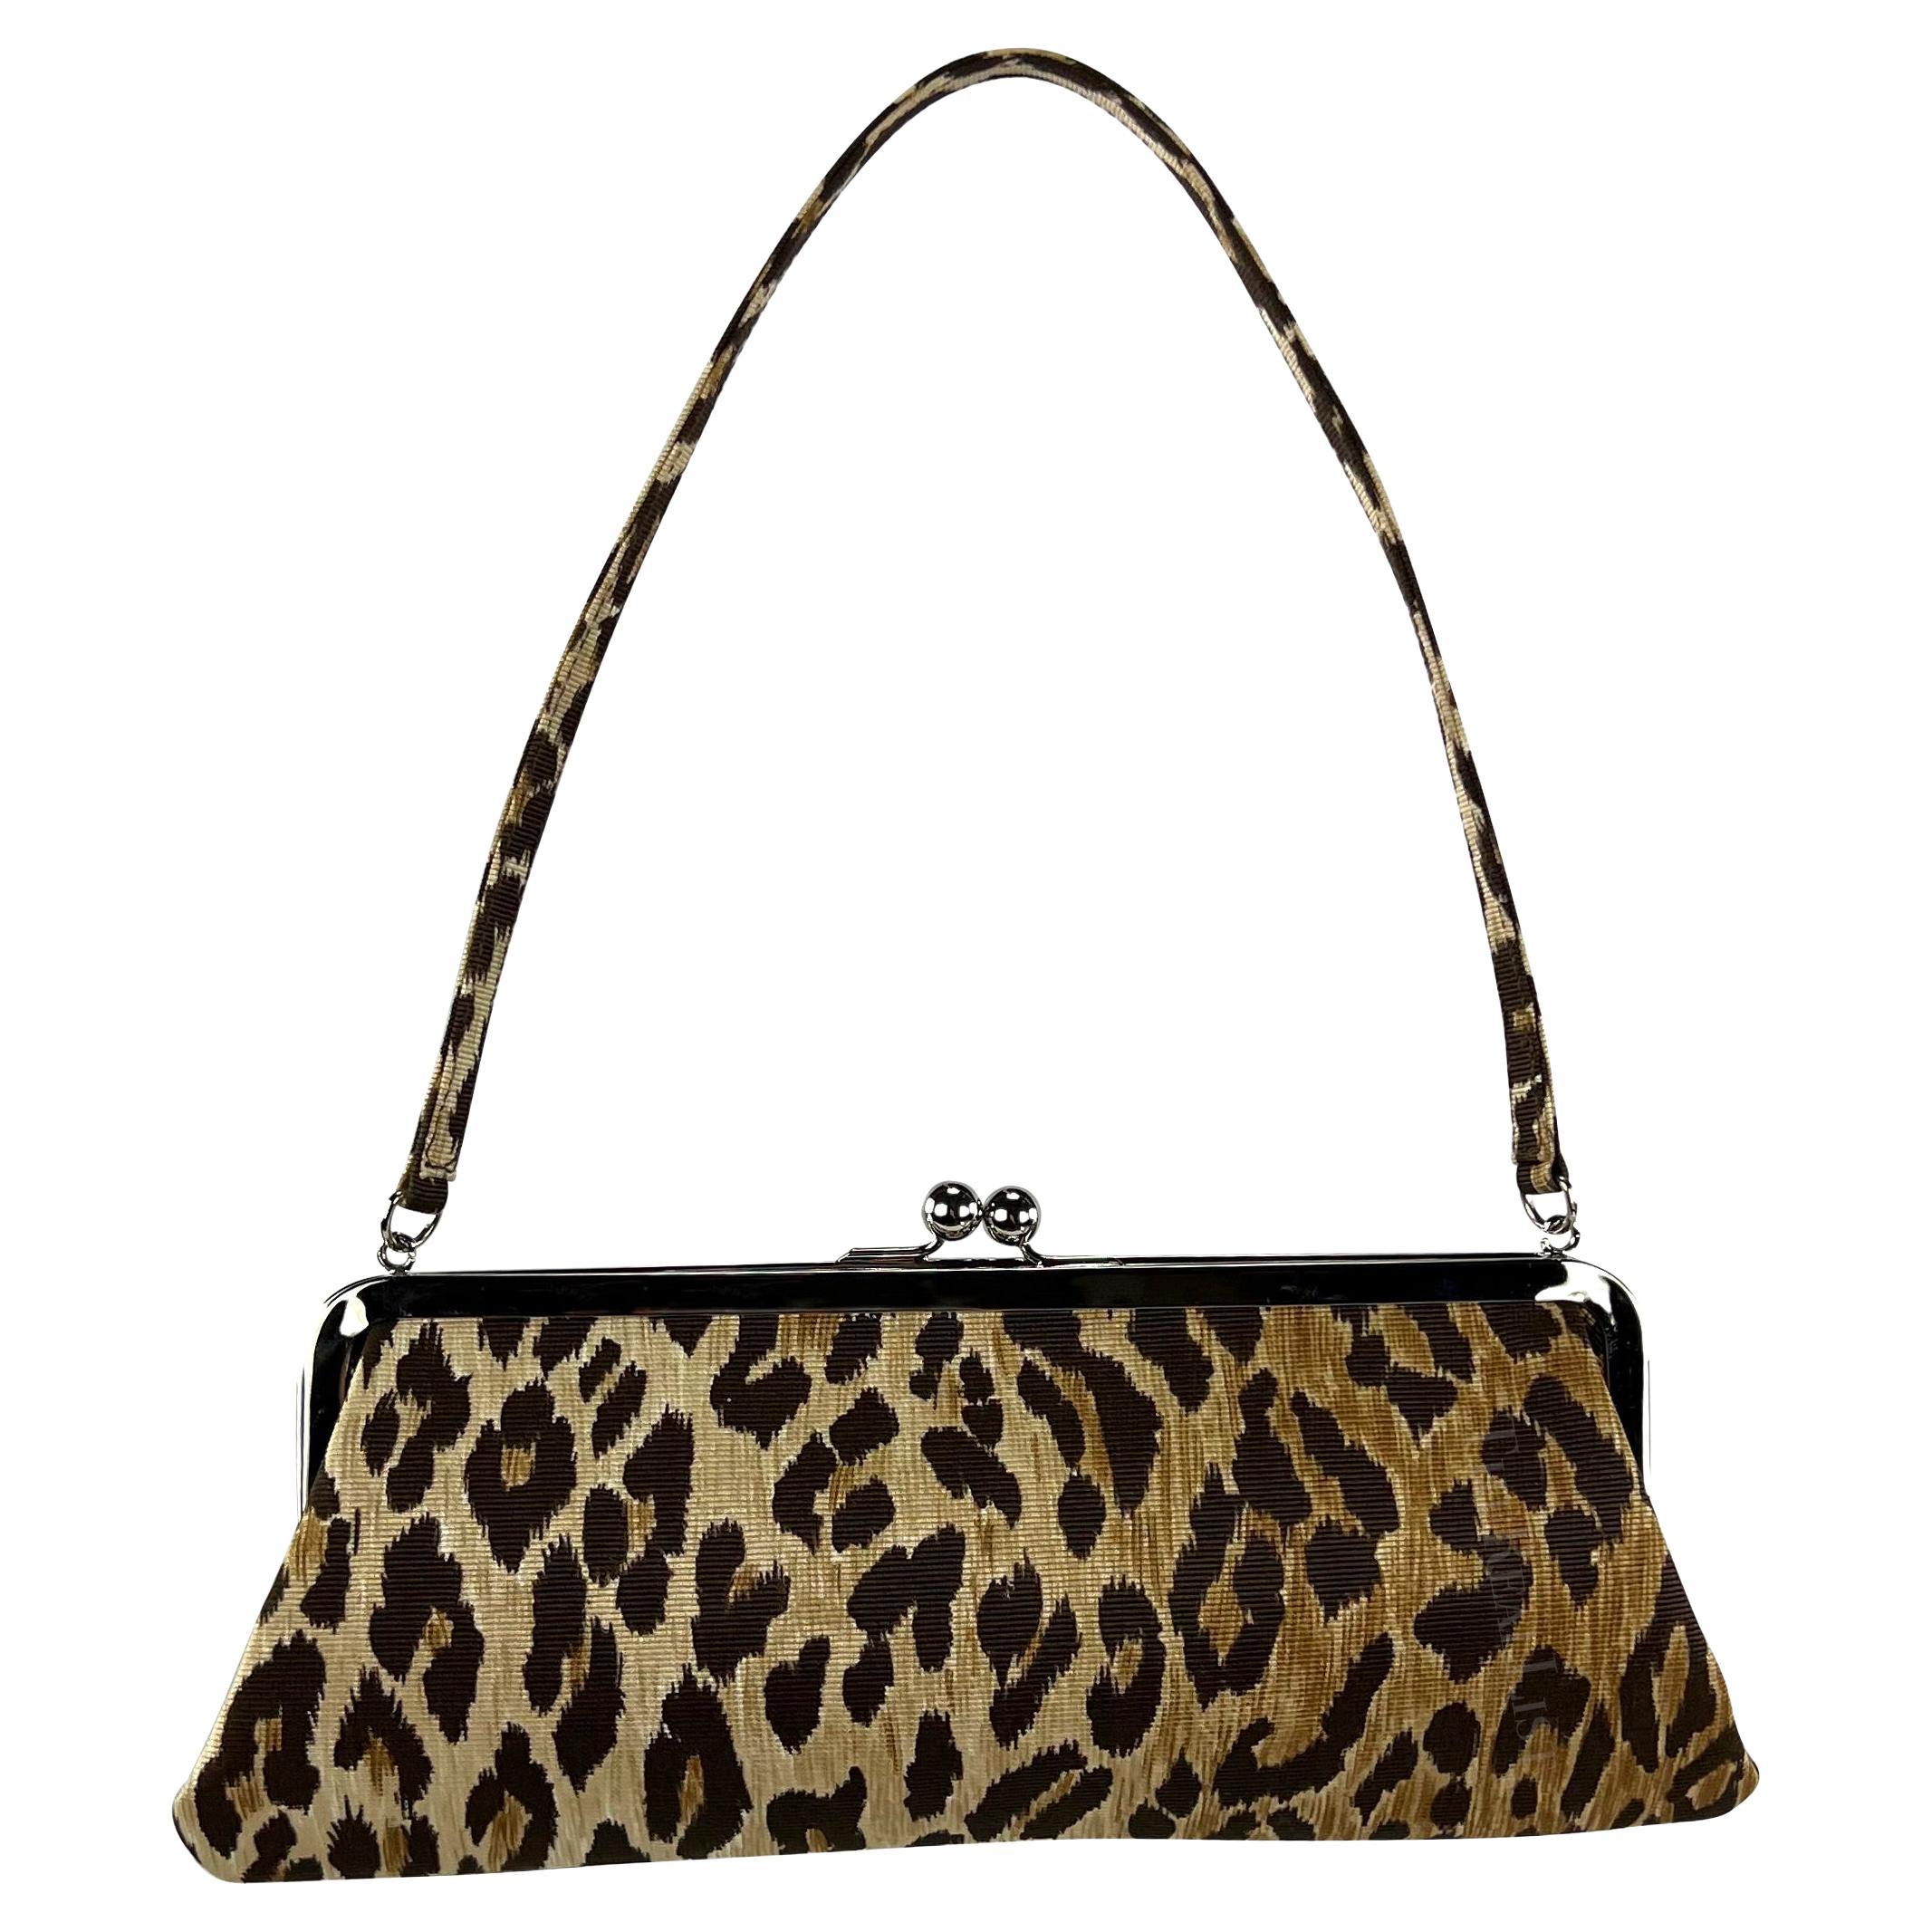 S/S 1997 Dolce & Gabbana Runway Cheetah Print Fabric Evening Shoulder Bag 3